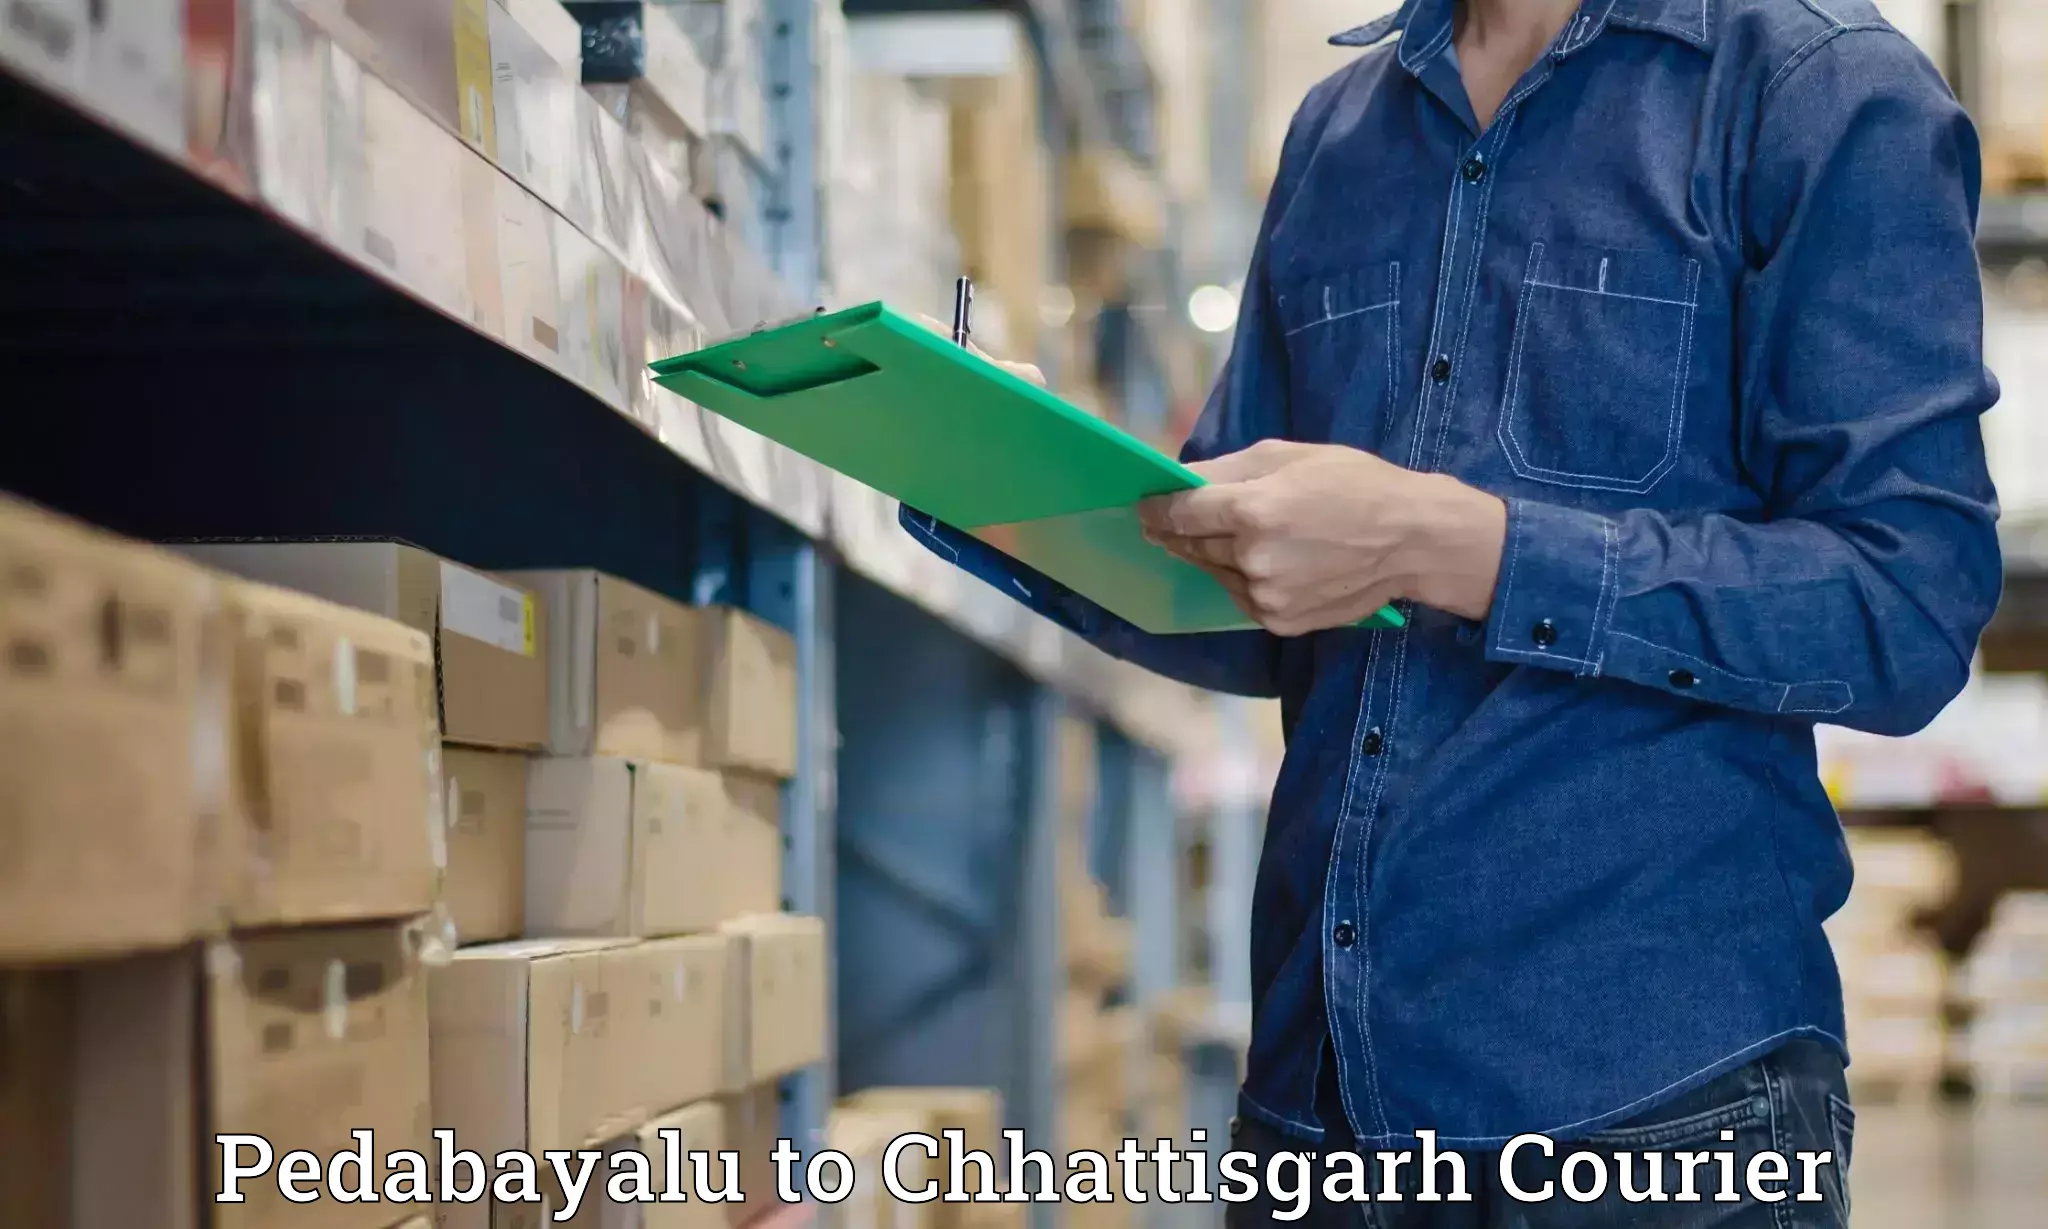 Express postal services Pedabayalu to Bijapur Chhattisgarh